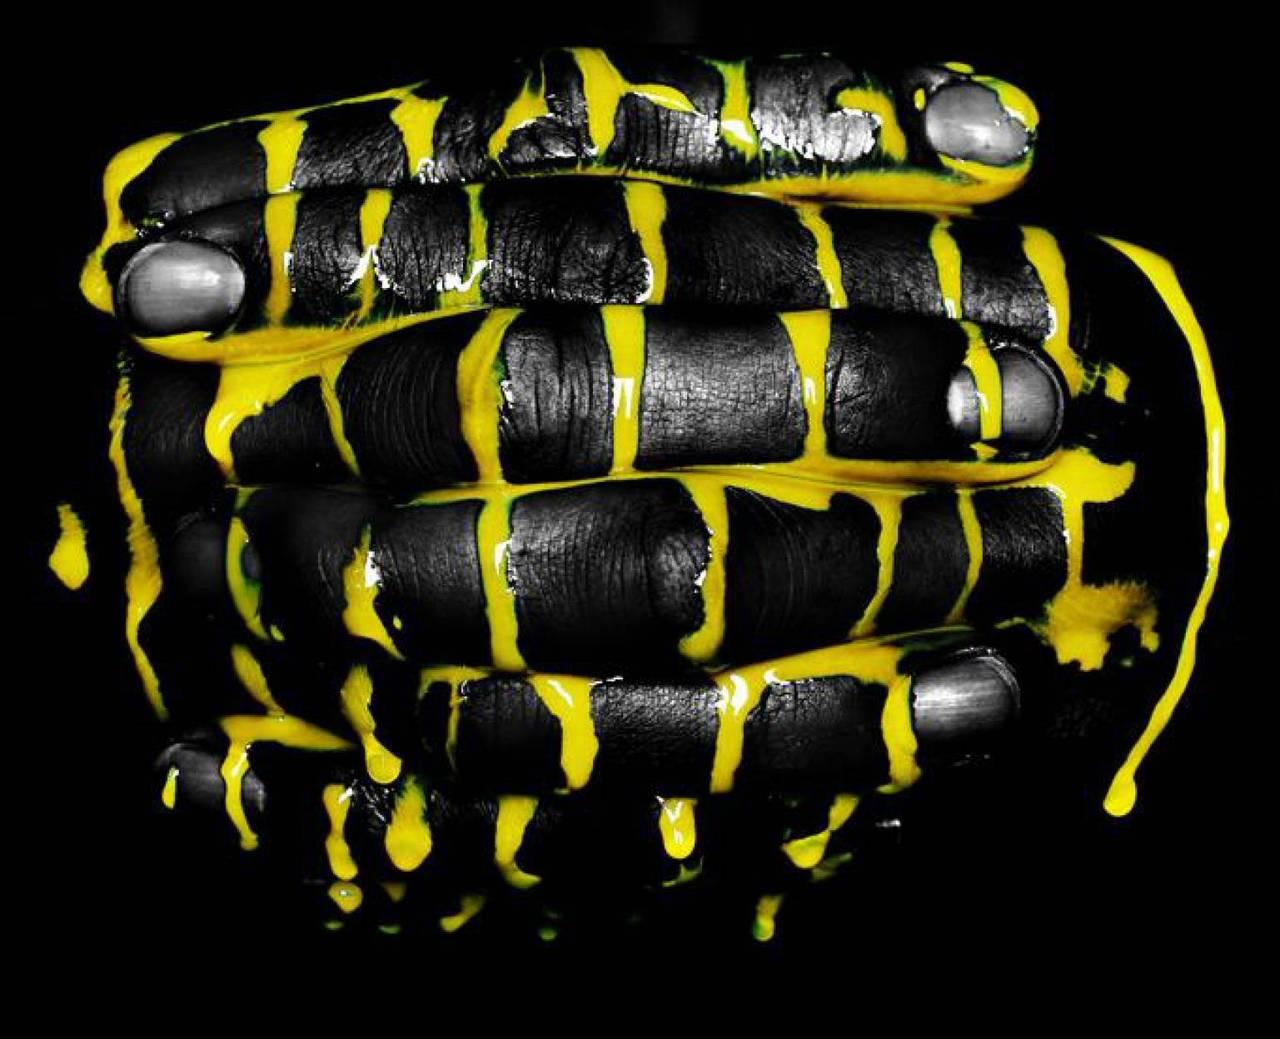 Howard Schatz Color Photograph - LLS #1032 - two hands folding looking snakelike